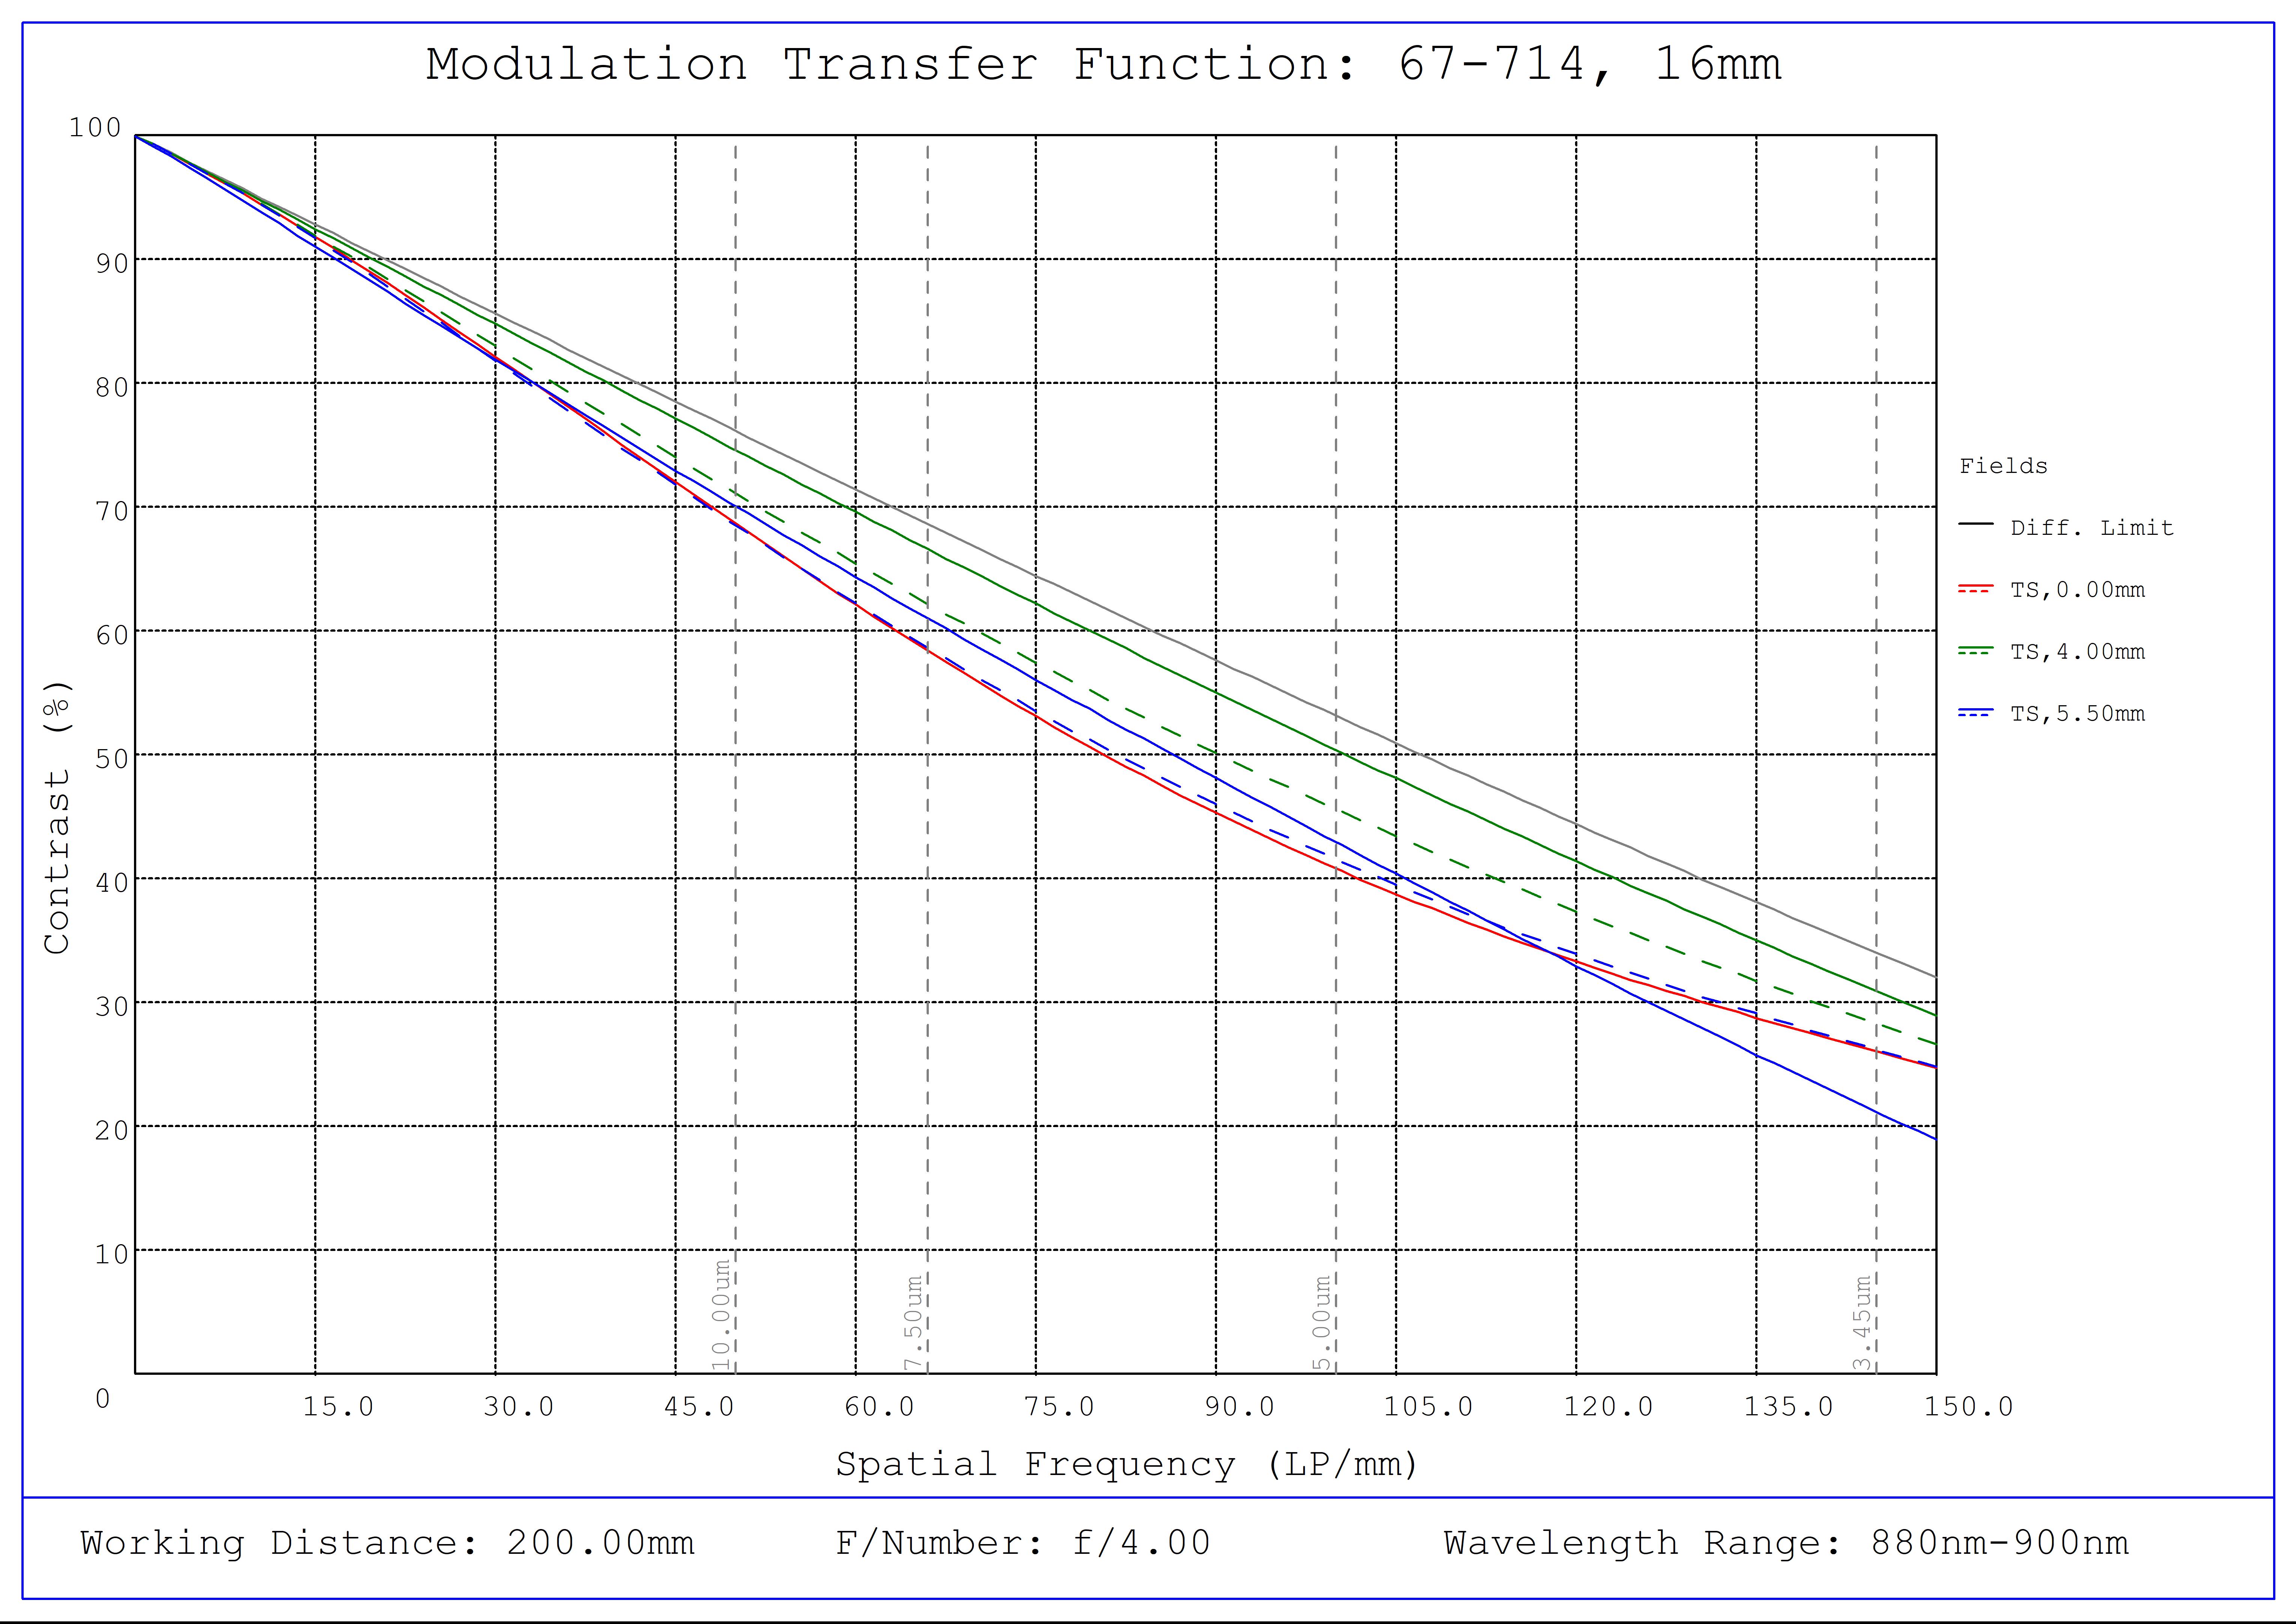 #67-714, 16mm C VIS-NIR Series Fixed Focal Length Lens, Modulated Transfer Function (MTF) Plot (NIR), 200mm Working Distance, f4